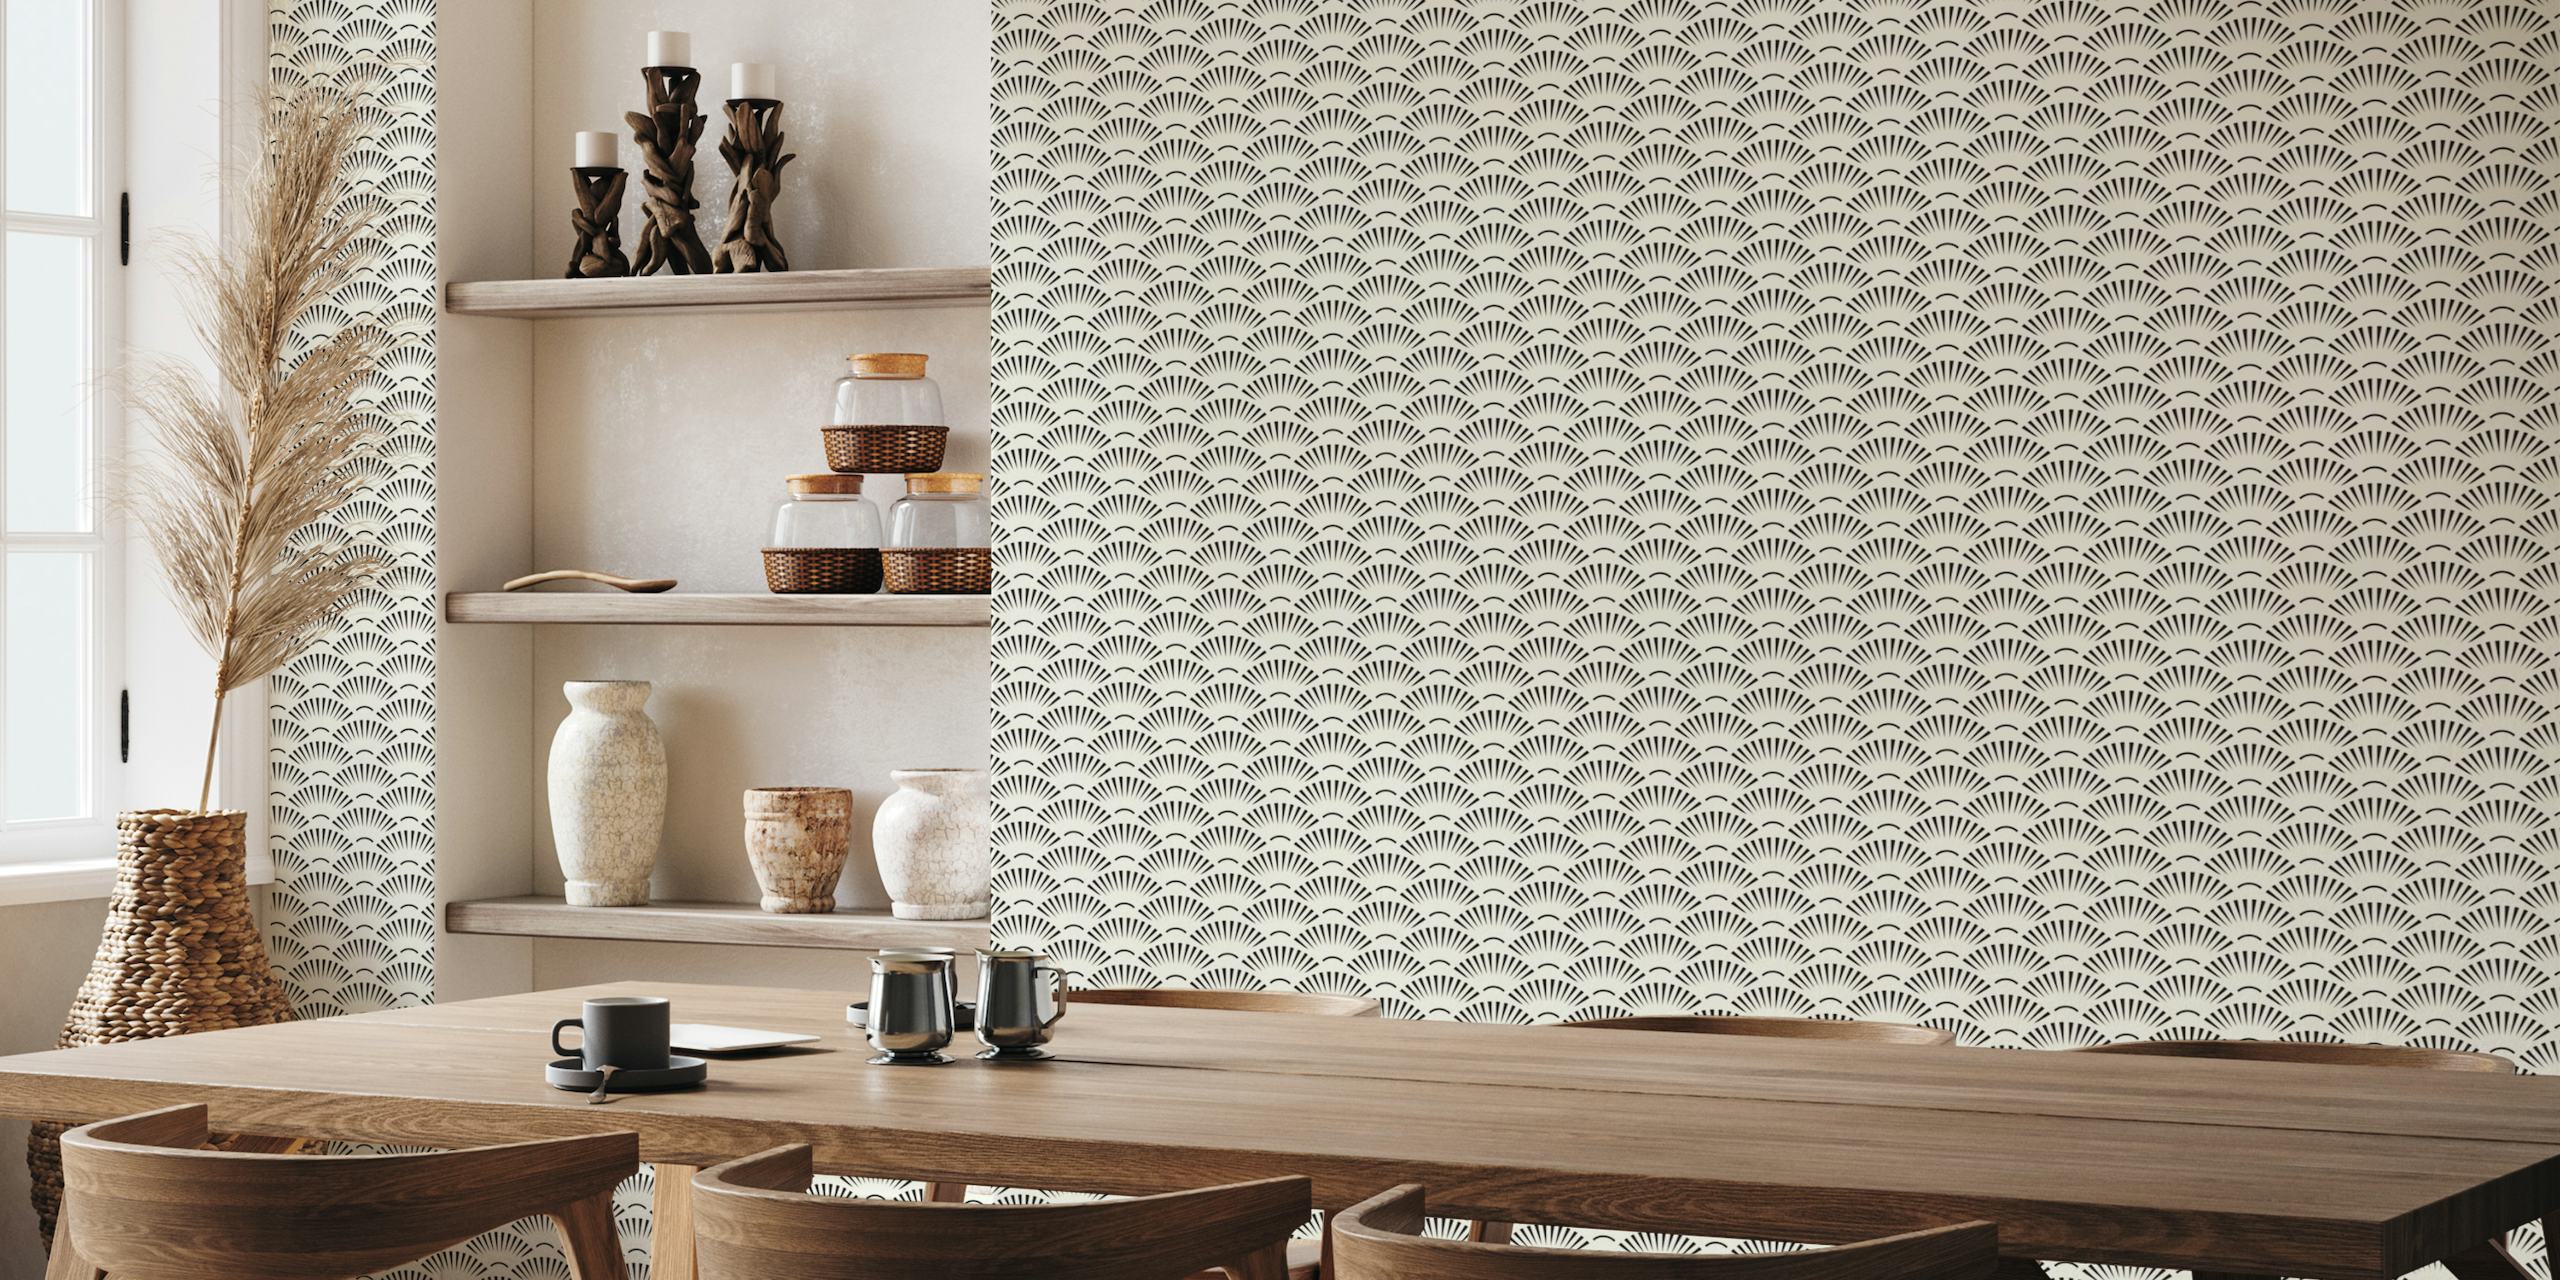 Sunburst pattern wallpaper